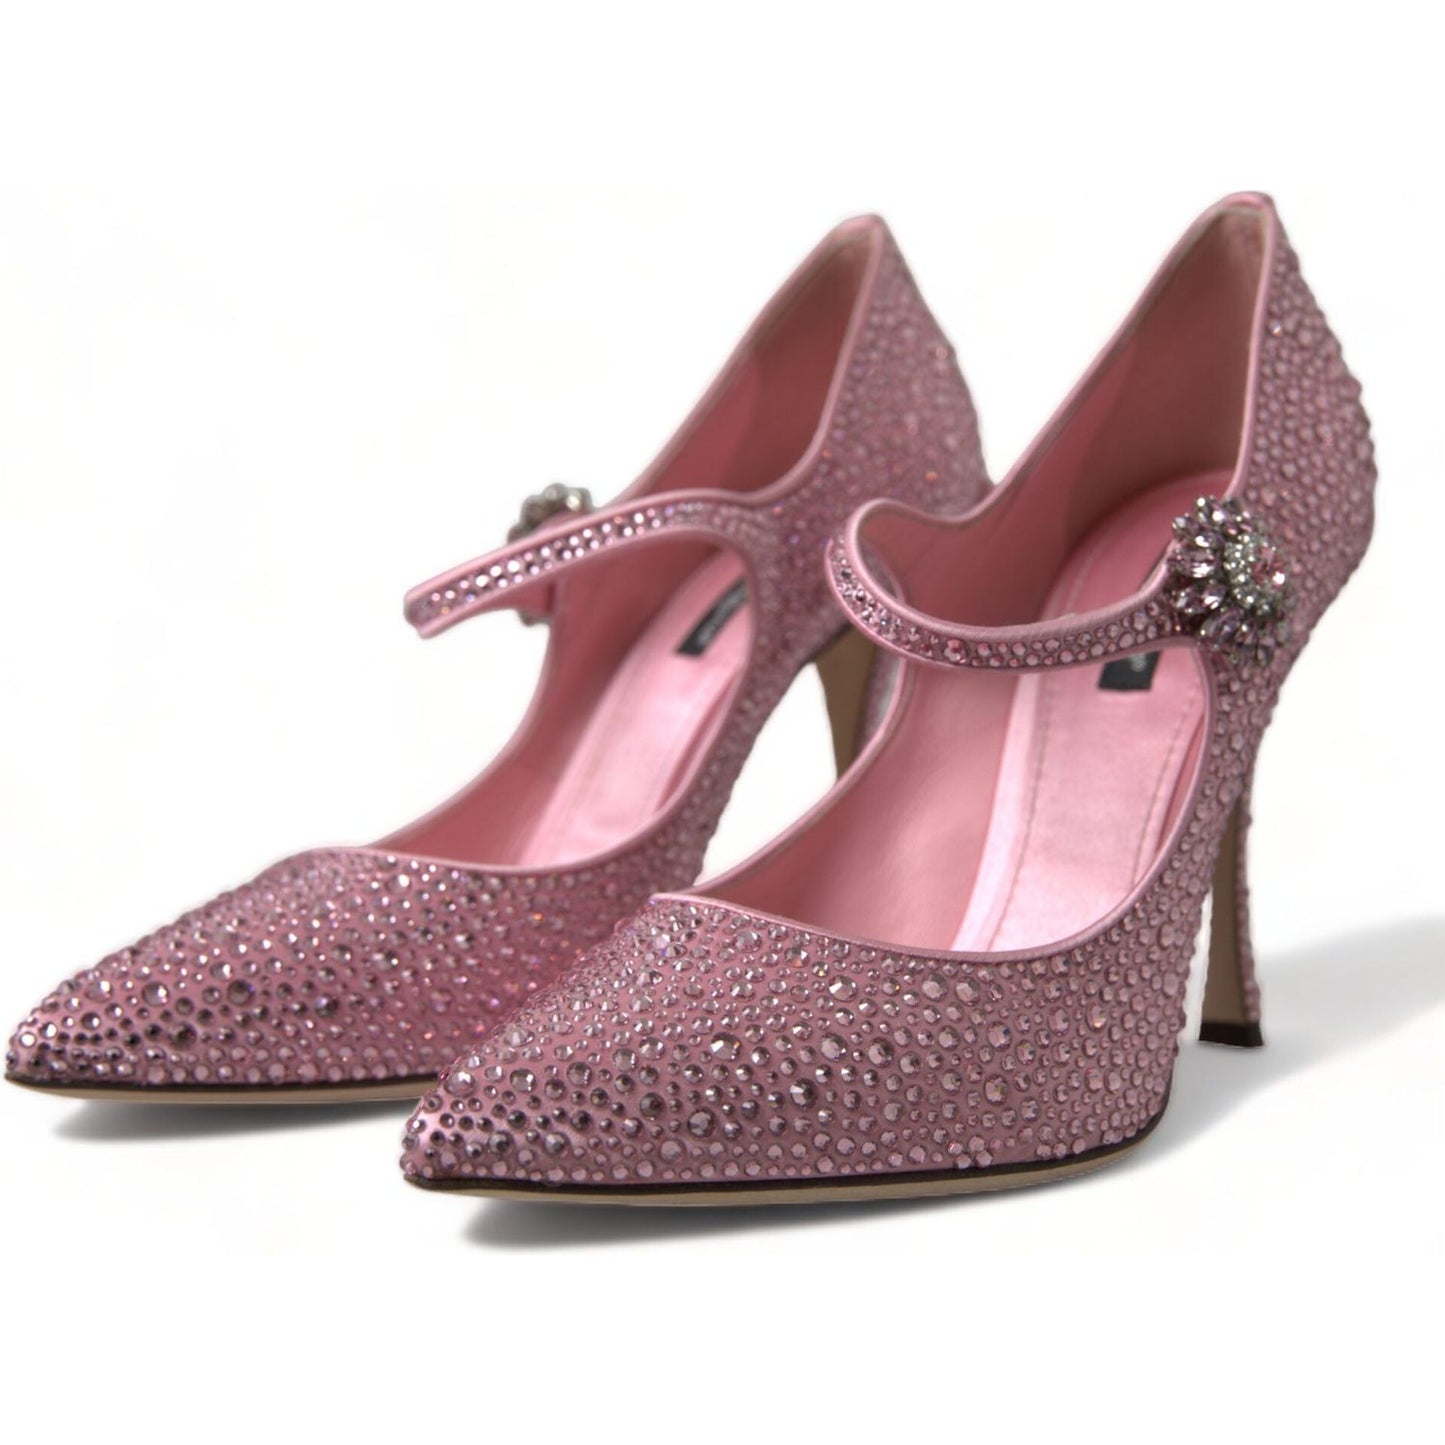 Dolce & Gabbana Enchanting Pink Crystal Pumps pink-strass-crystal-heels-pumps-shoes 465A9308-bg-scaled-beeba0b4-ab9.jpg